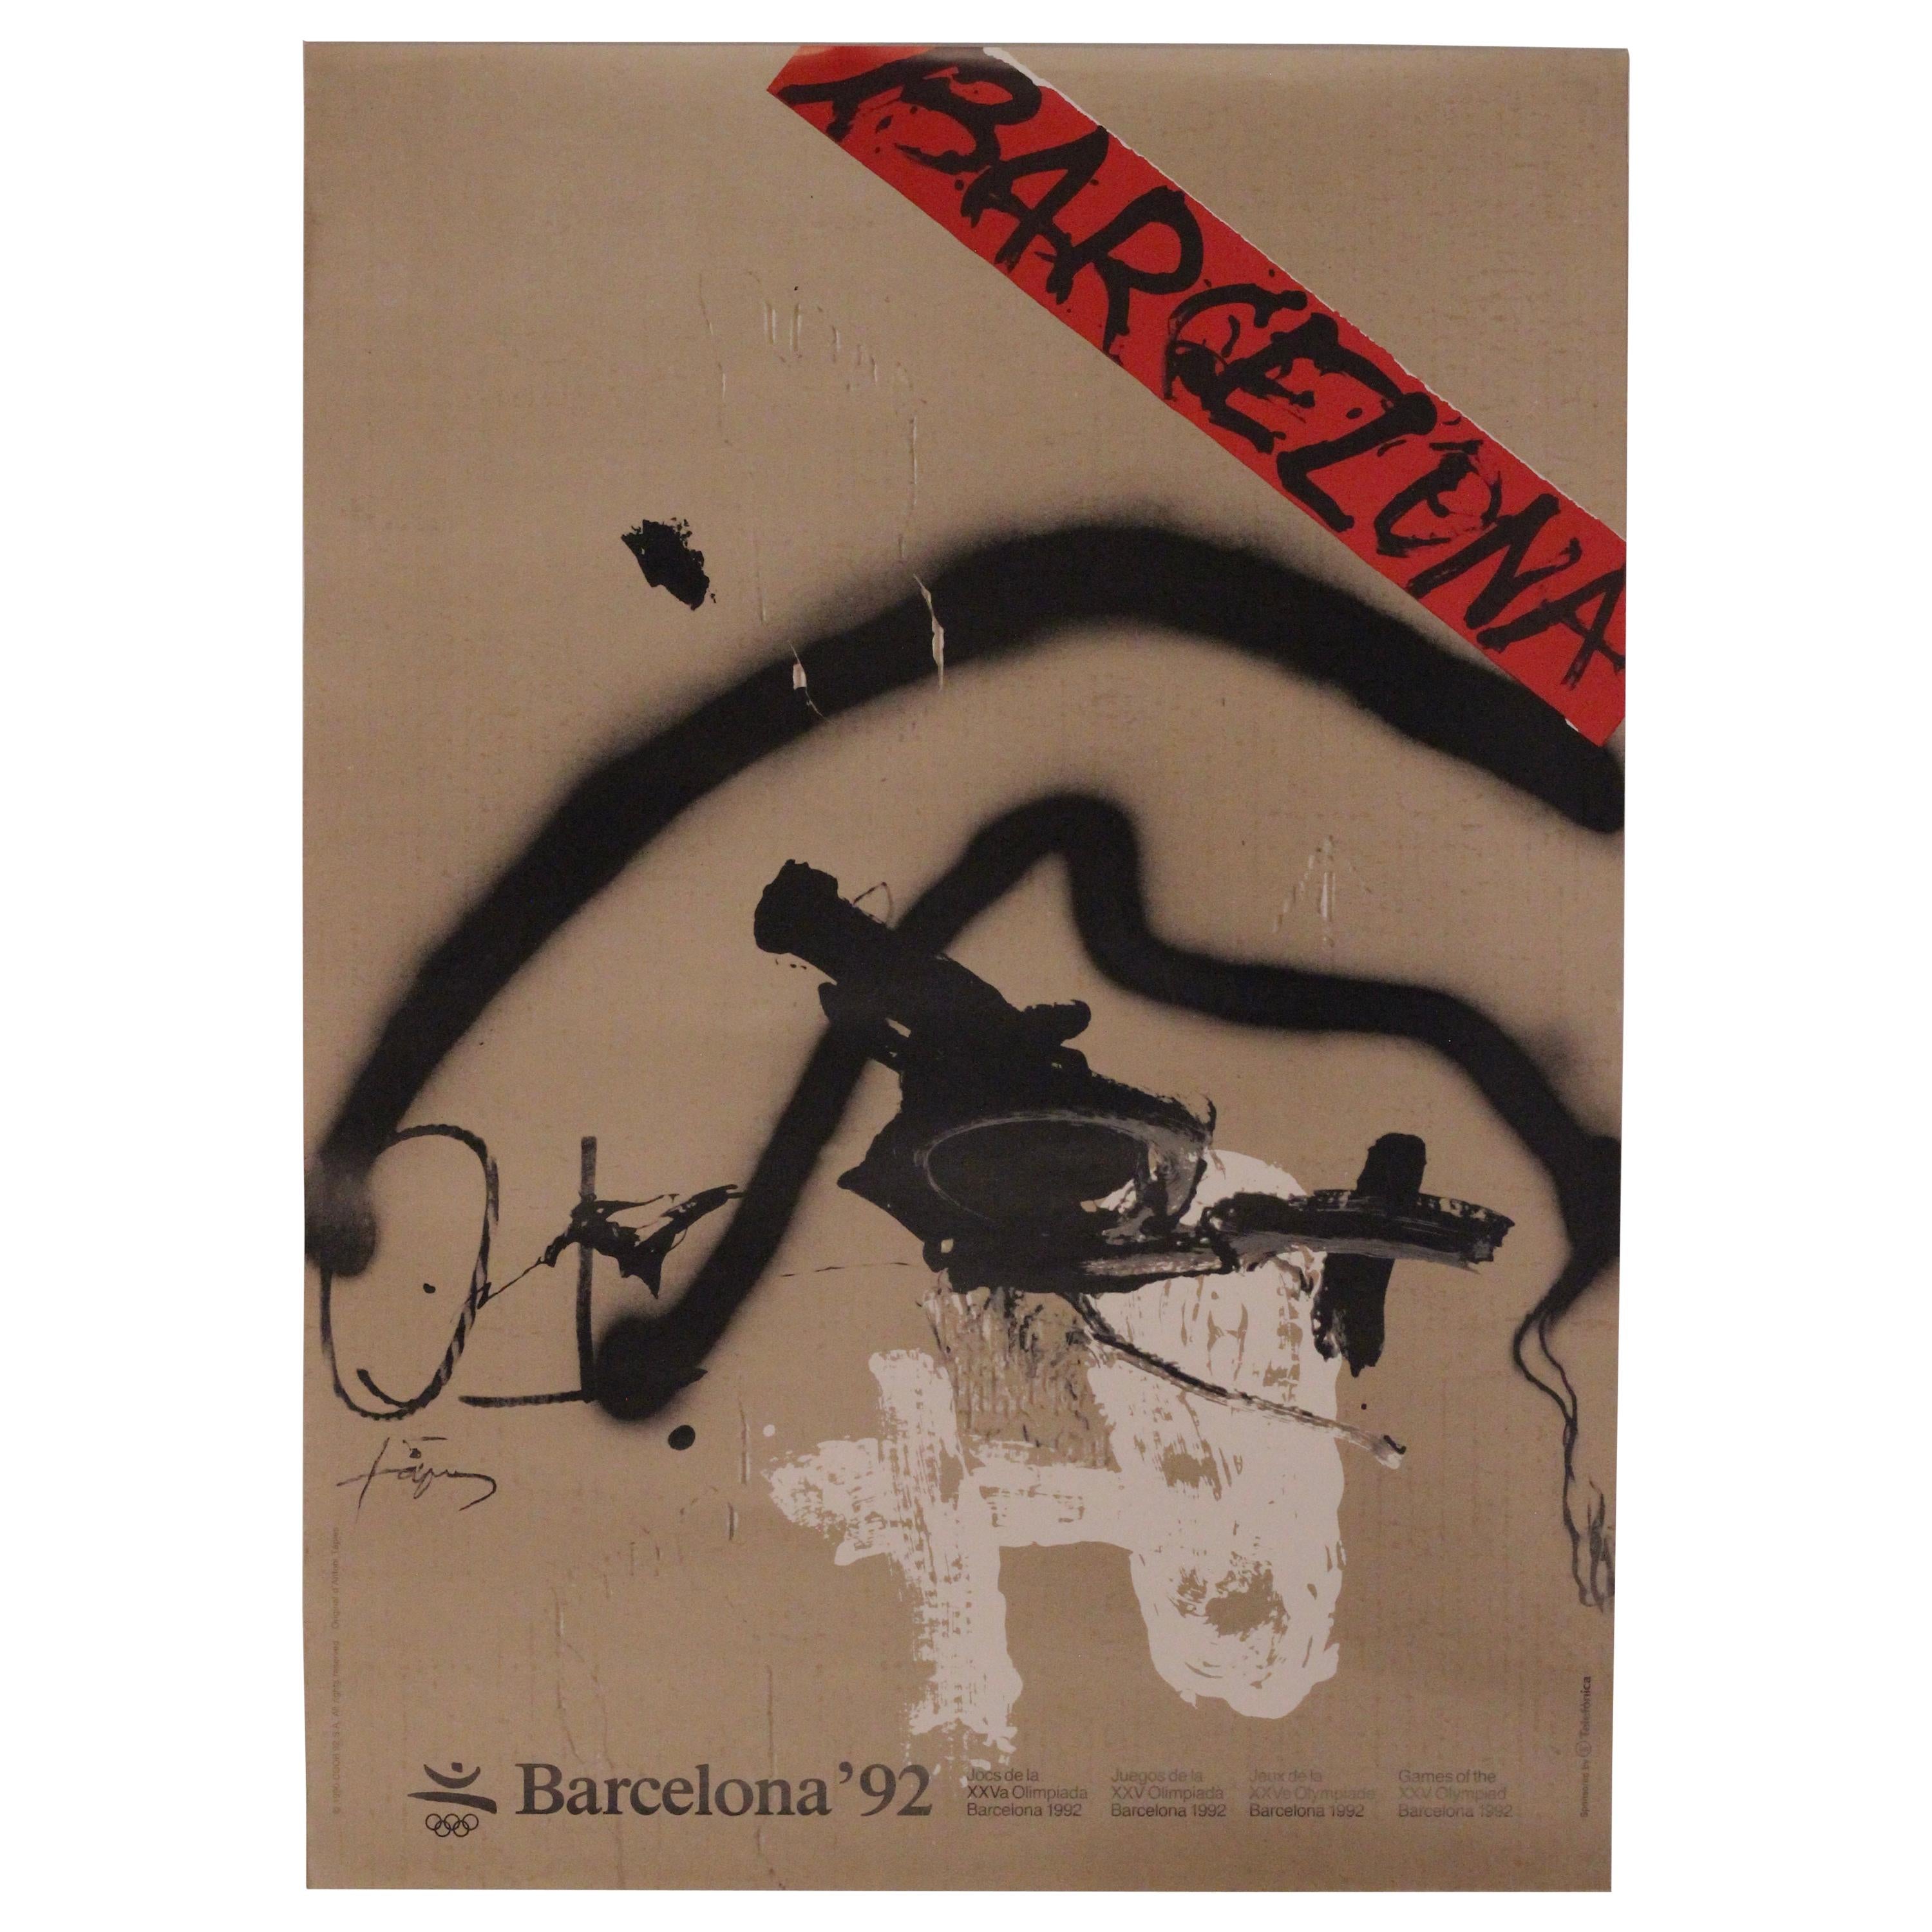 Original 1992 Barcelona Olympic Poster Designed by Antoni Tàpies, XXV Olympiad